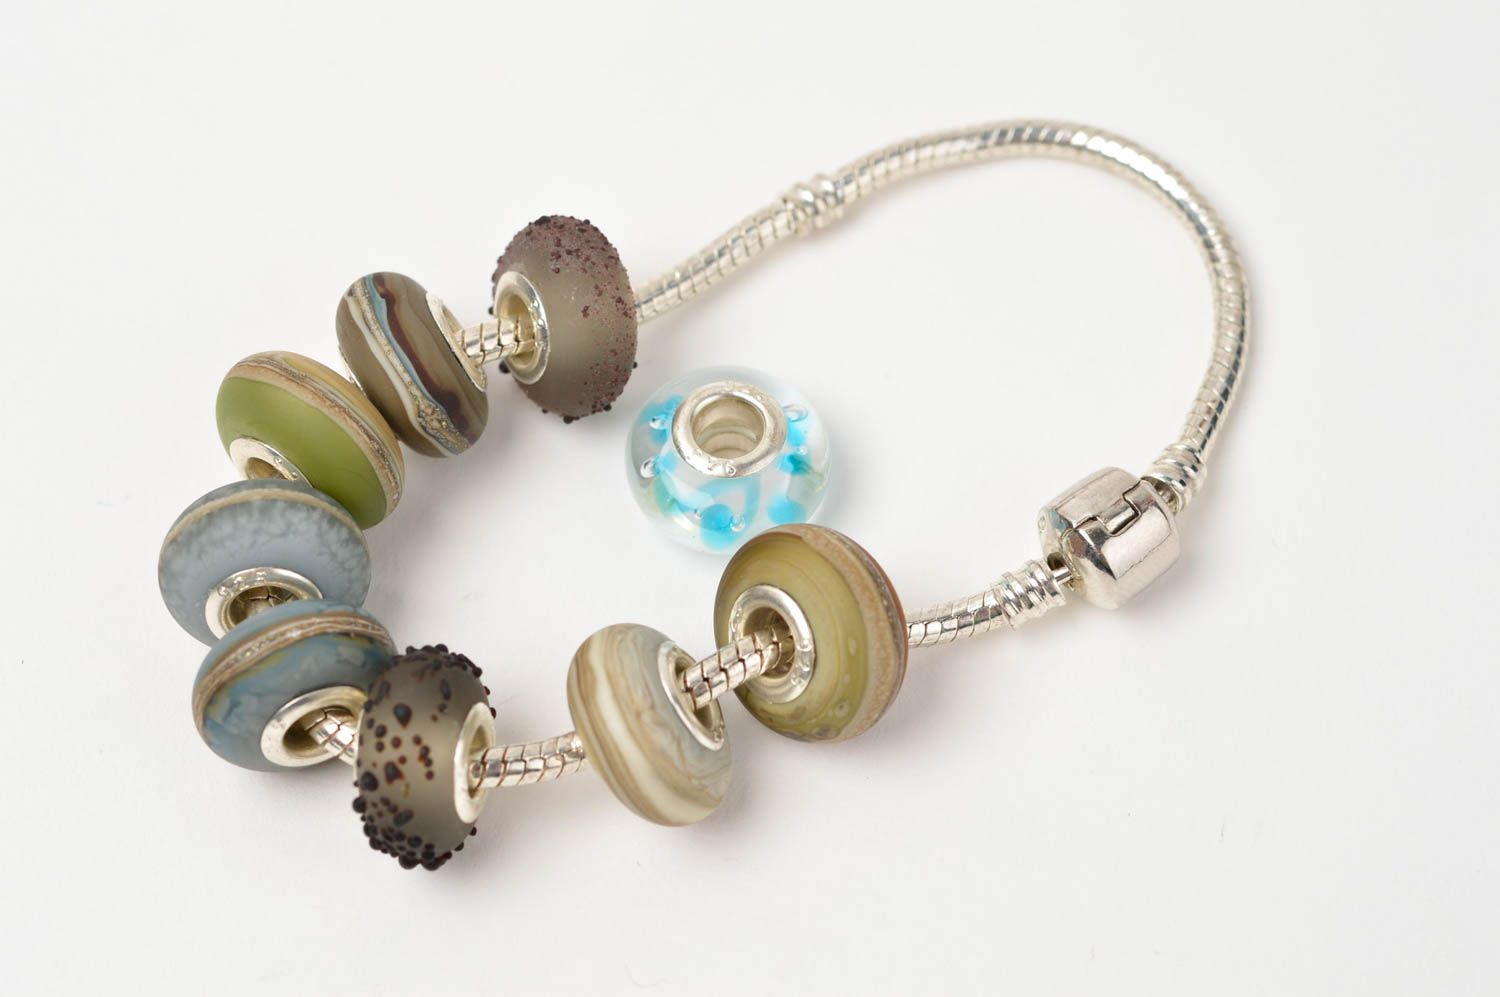 Beautiful handmade glass bead jewellery making ideas art and craft supplies photo 5